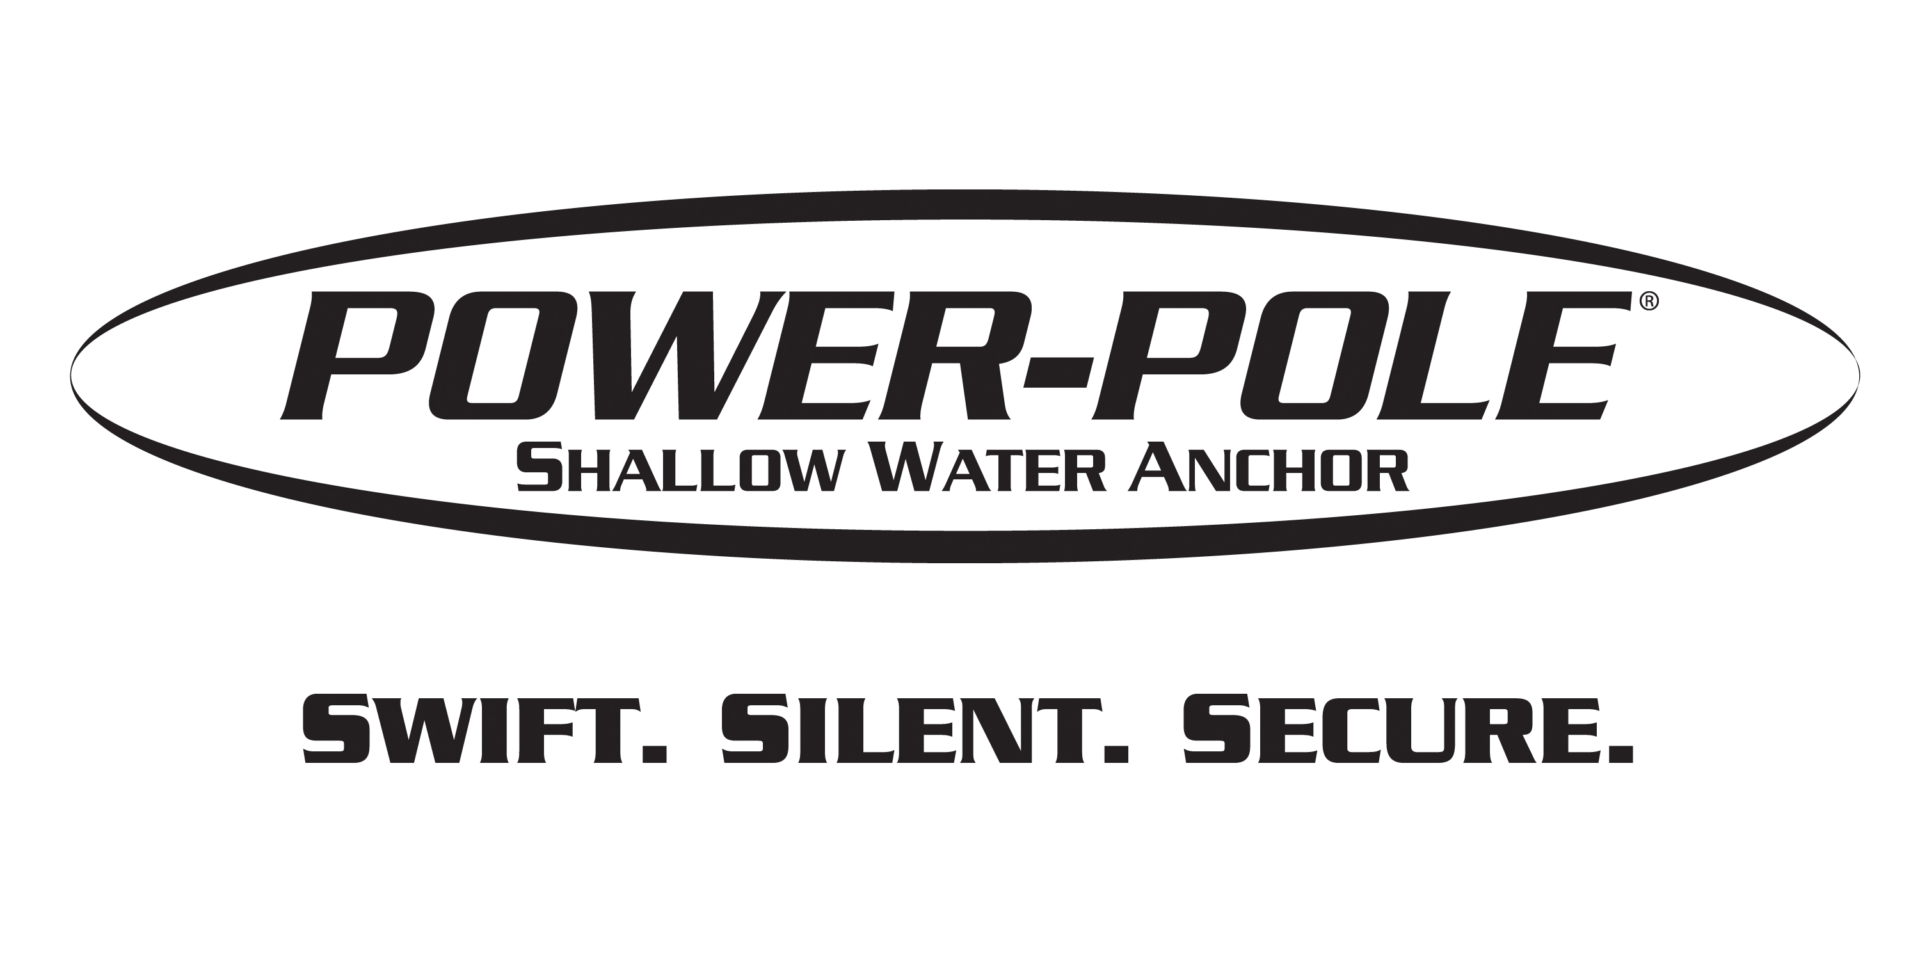 a power pole logo